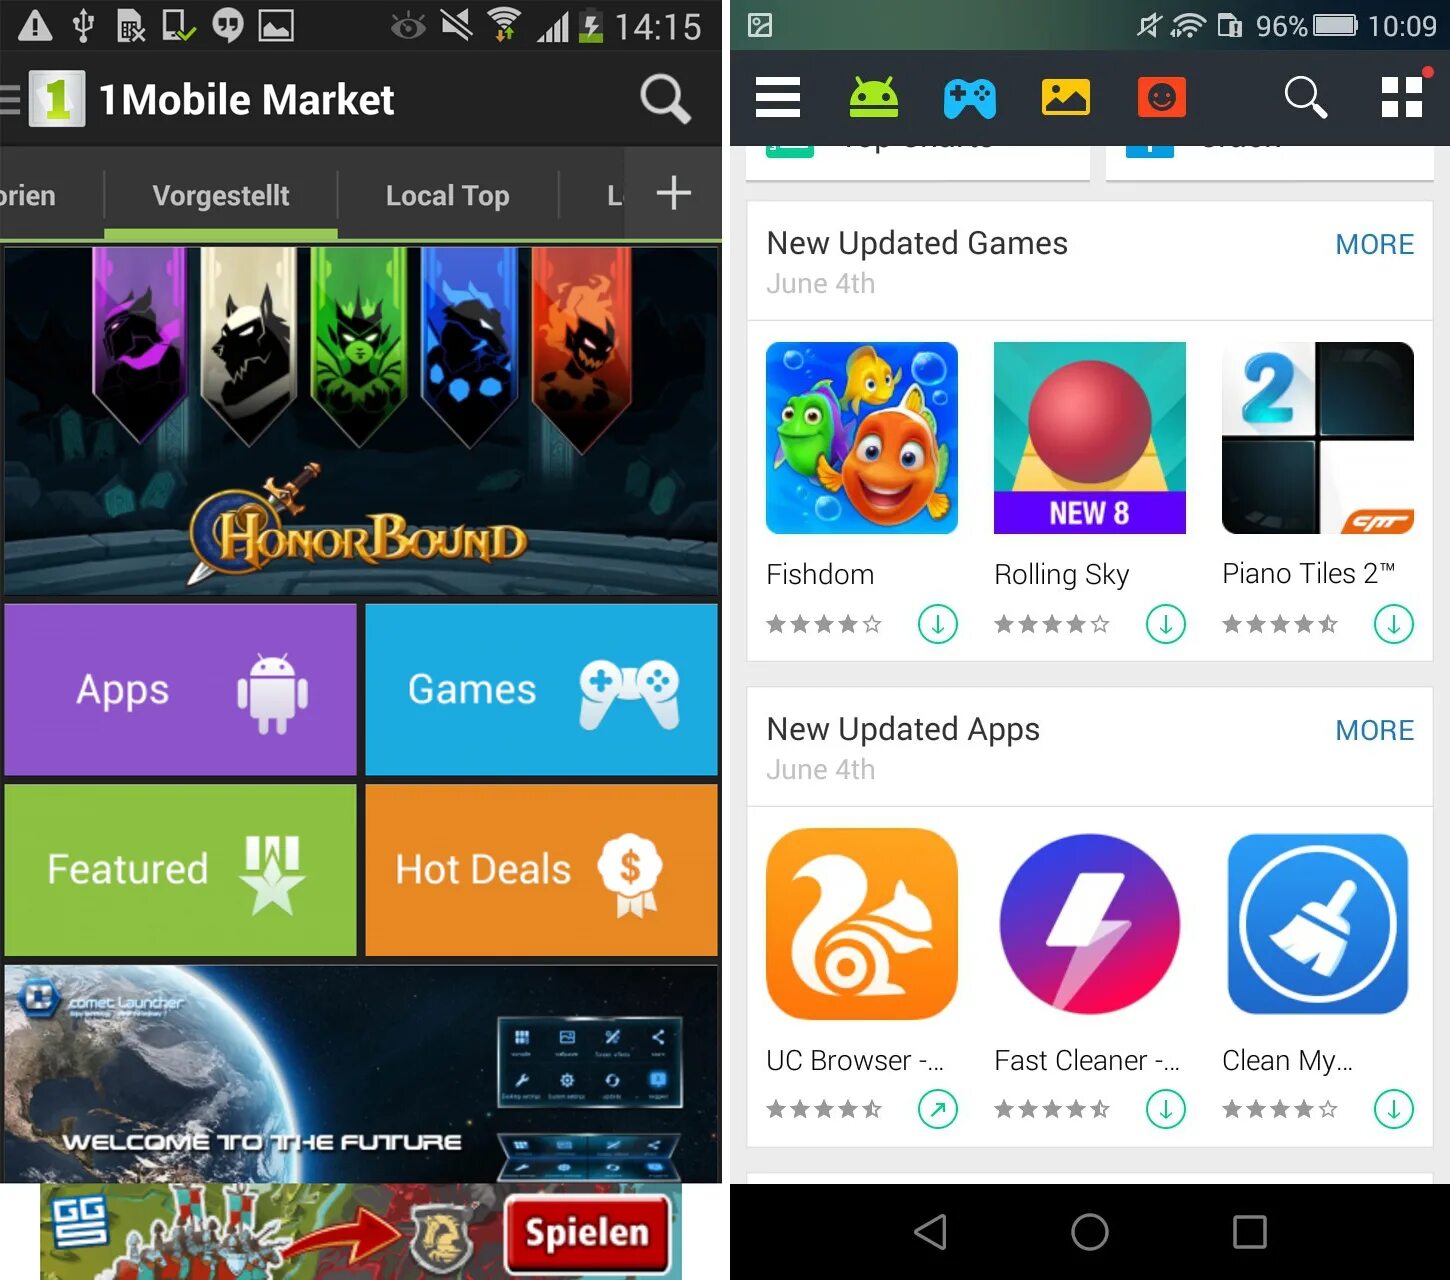 Андроид маркет 4.1. Андроид Маркет. 1 Мобильный Маркет. Android Market приложение. Магазин 1 mobile.